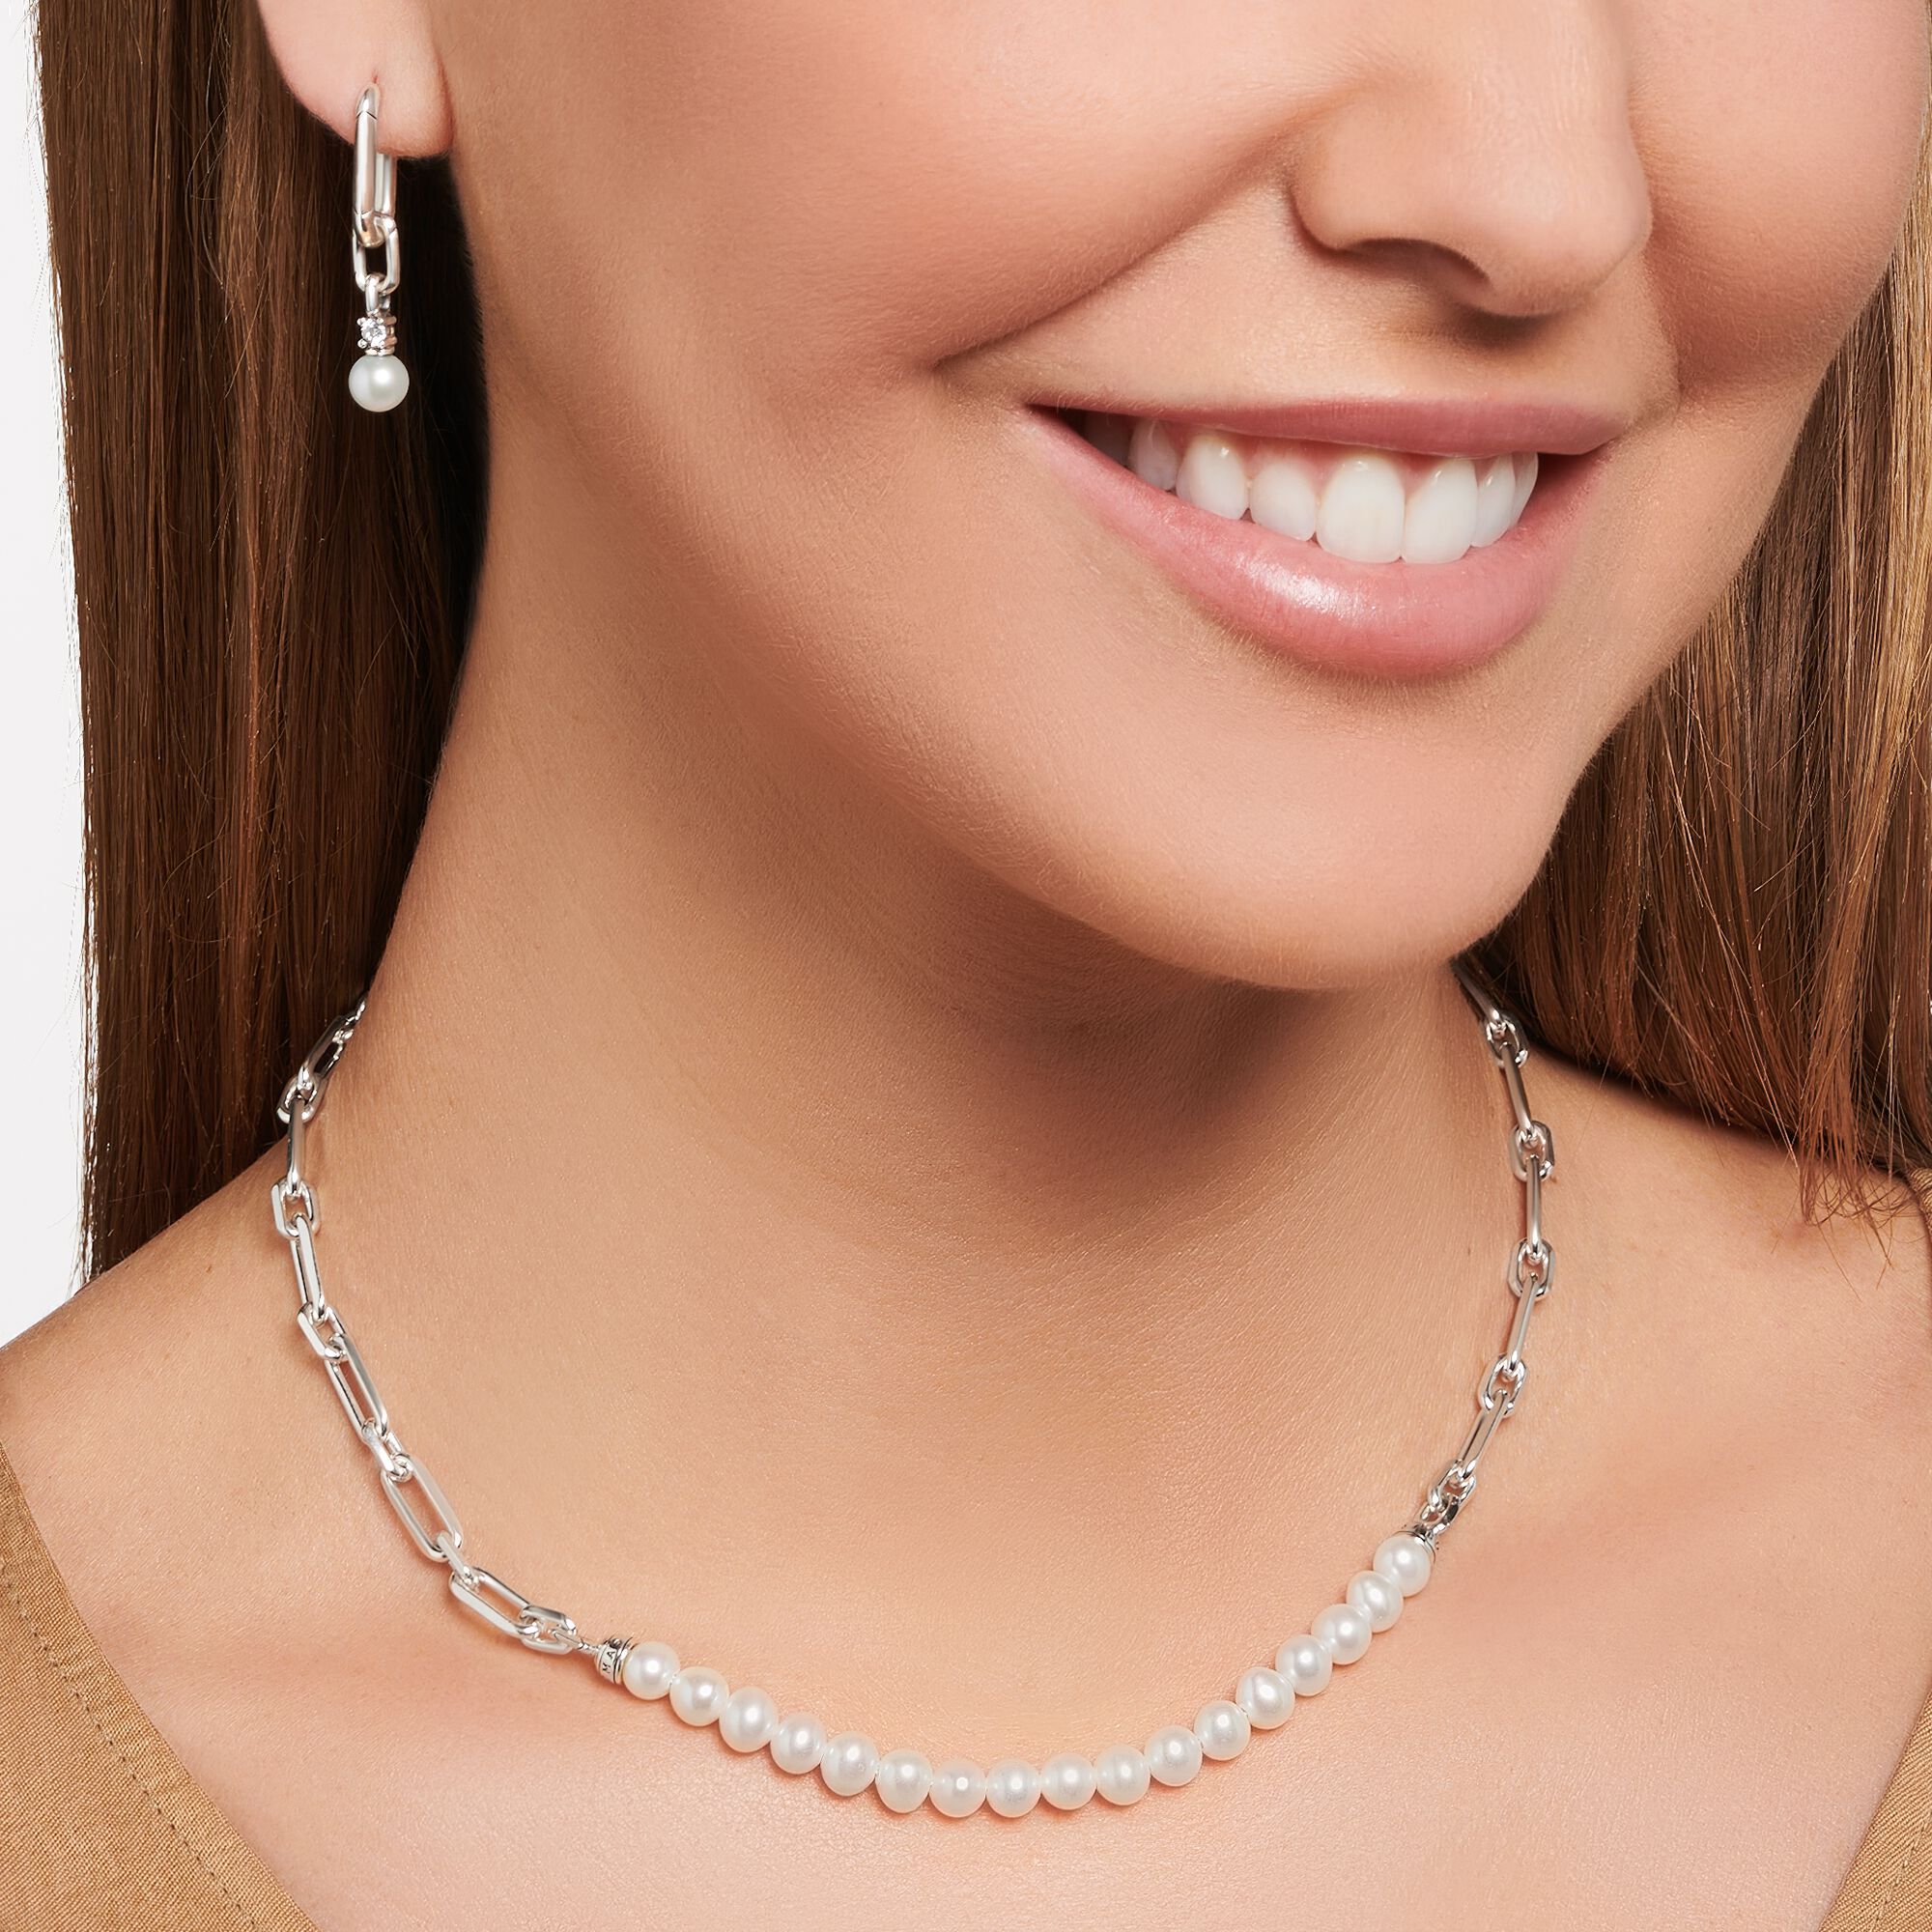 Thomas Sabo KE2183-082-6 Choker pearl ladies necklace, adjustable | eBay